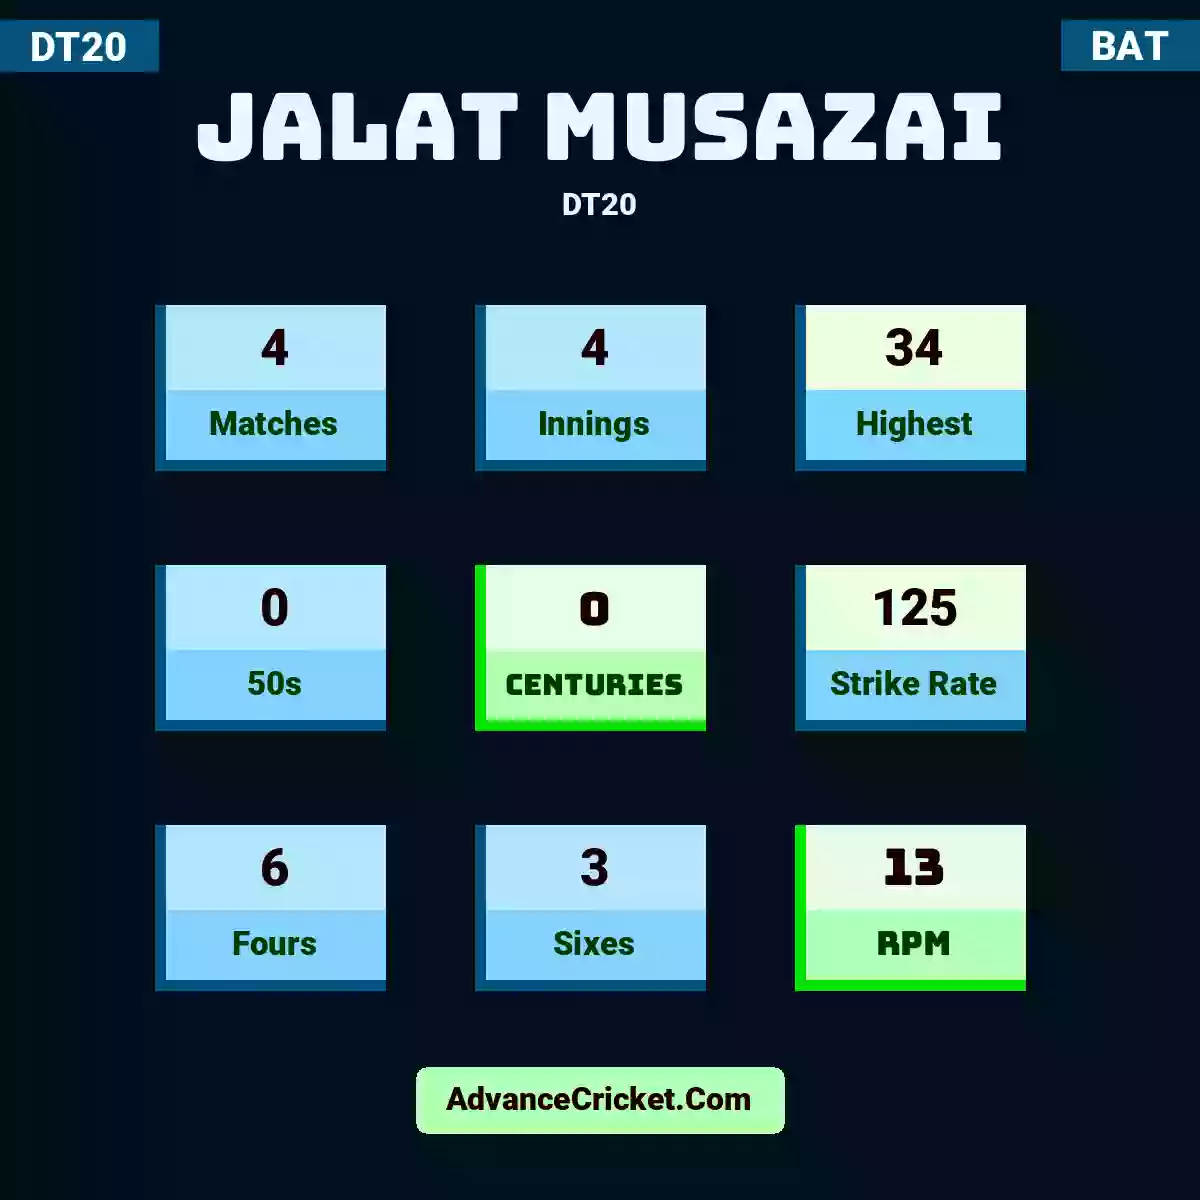 Jalat Musazai DT20 , Jalat Musazai played 4 matches, scored 34 runs as highest, 0 half-centuries, and 0 centuries, with a strike rate of 125. J.Musazai hit 6 fours and 3 sixes, with an RPM of 13.